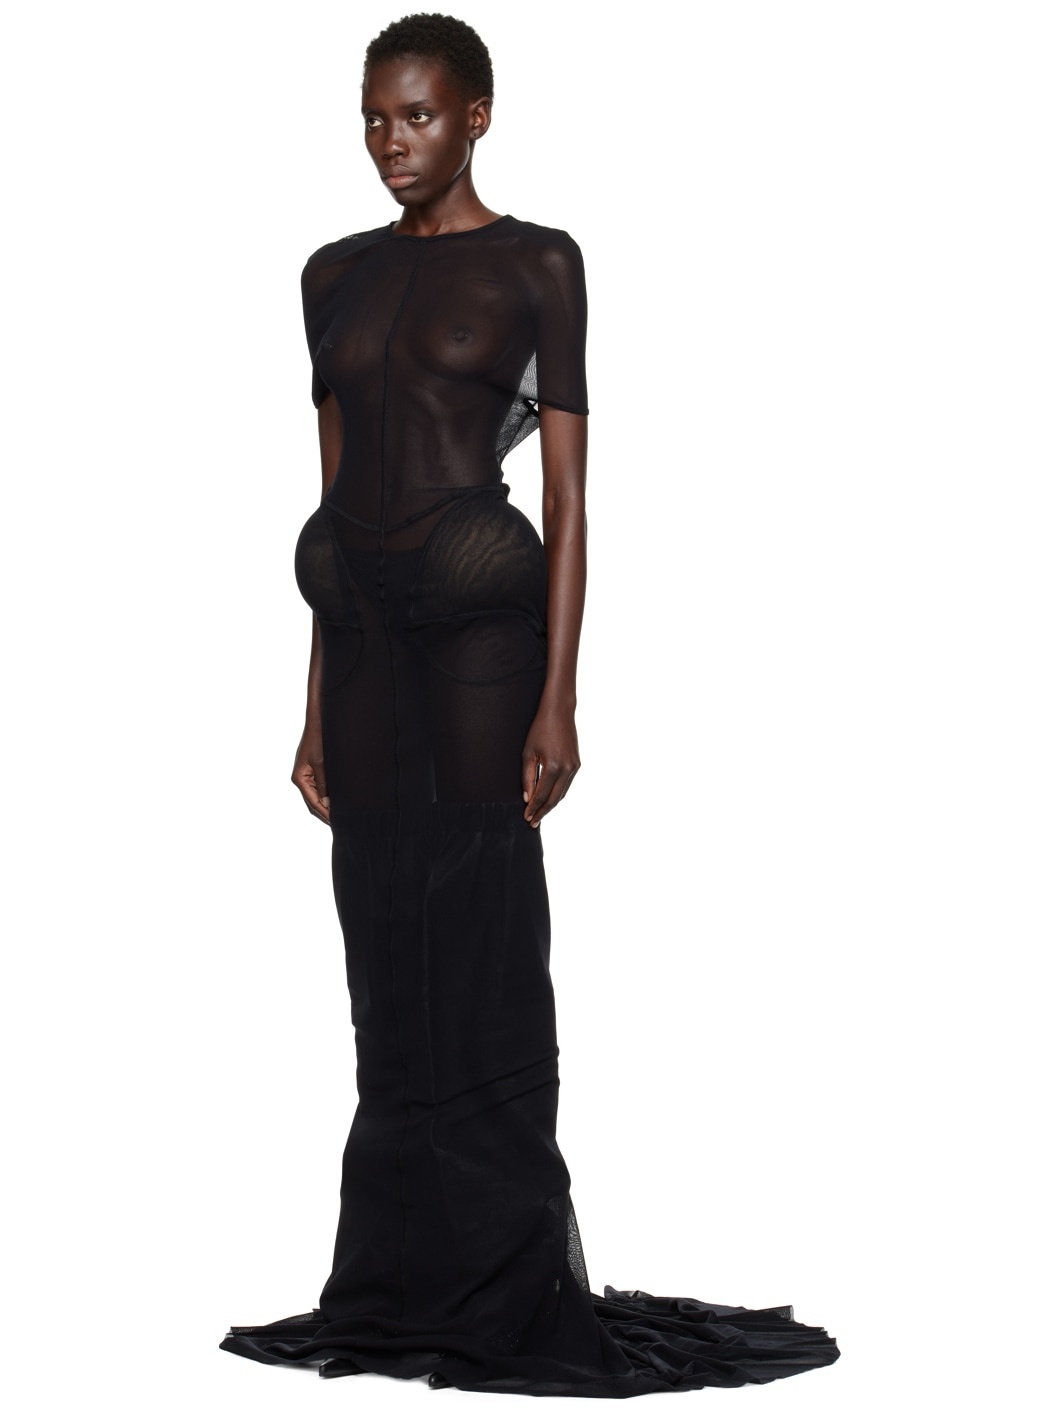 Black Shayne Oliver Edition Maxi Dress - 4